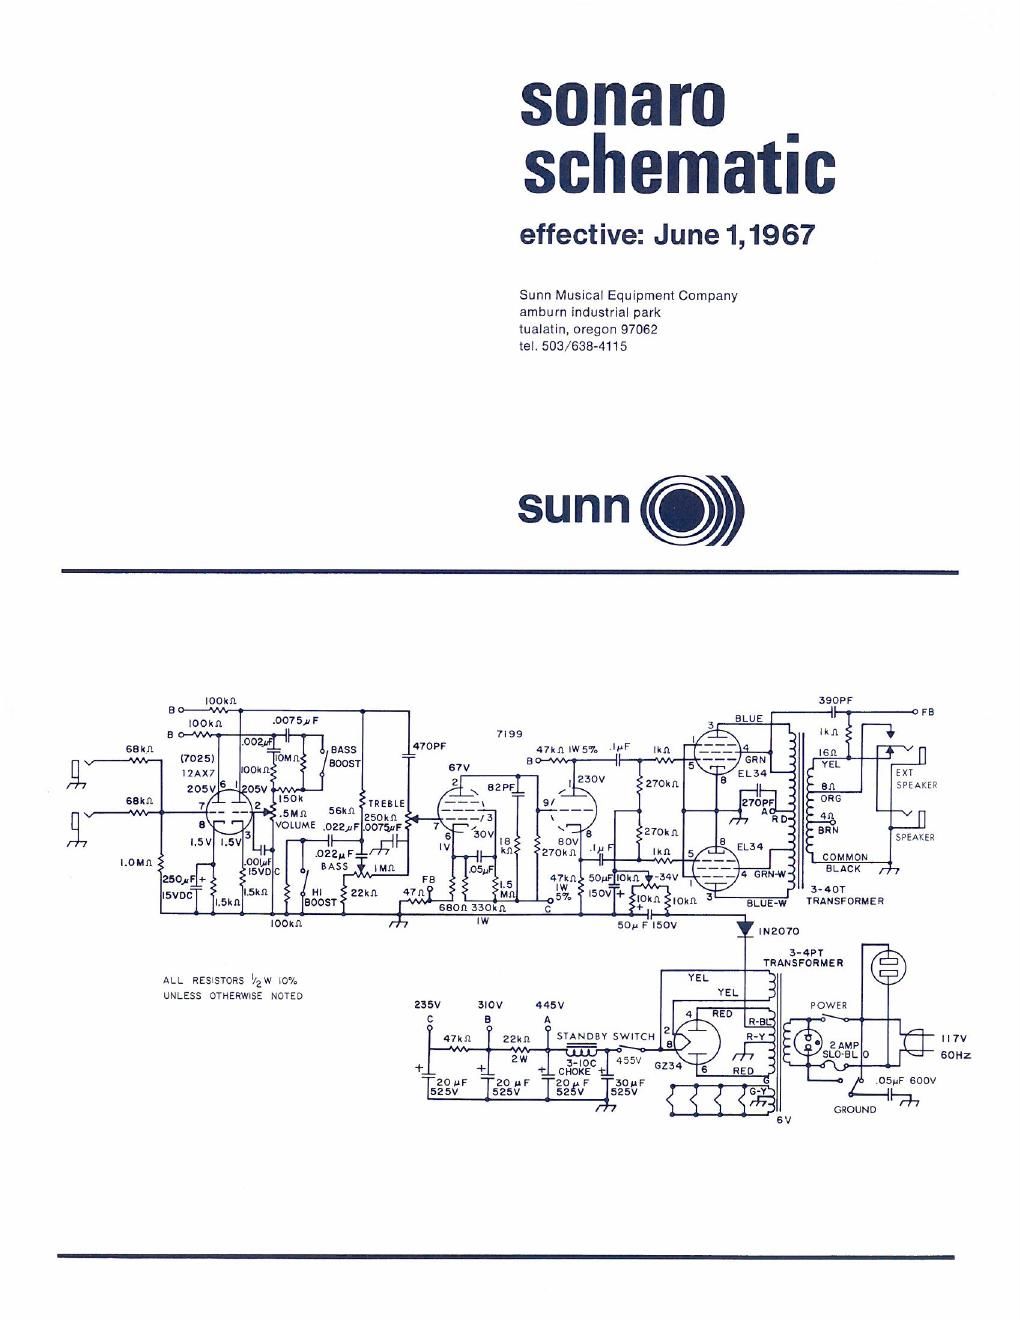 sunn sonaro schematic